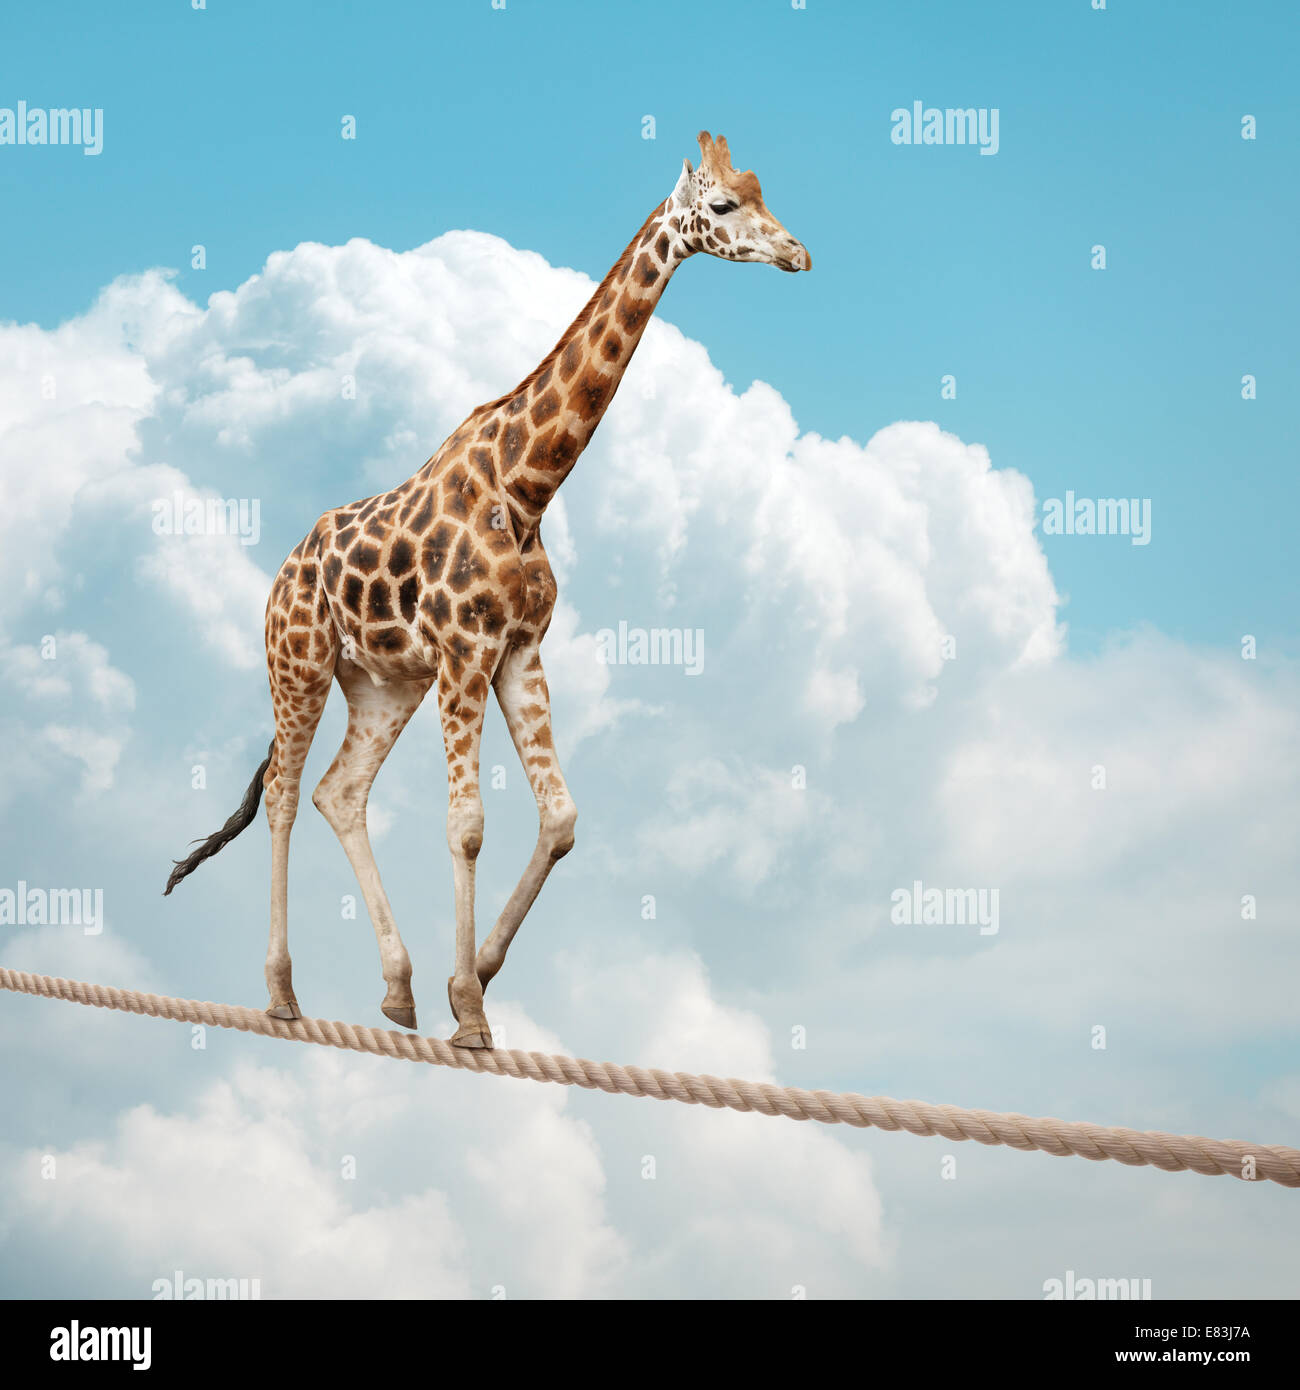 Giraffe balancing on a tightrope Stock Photo